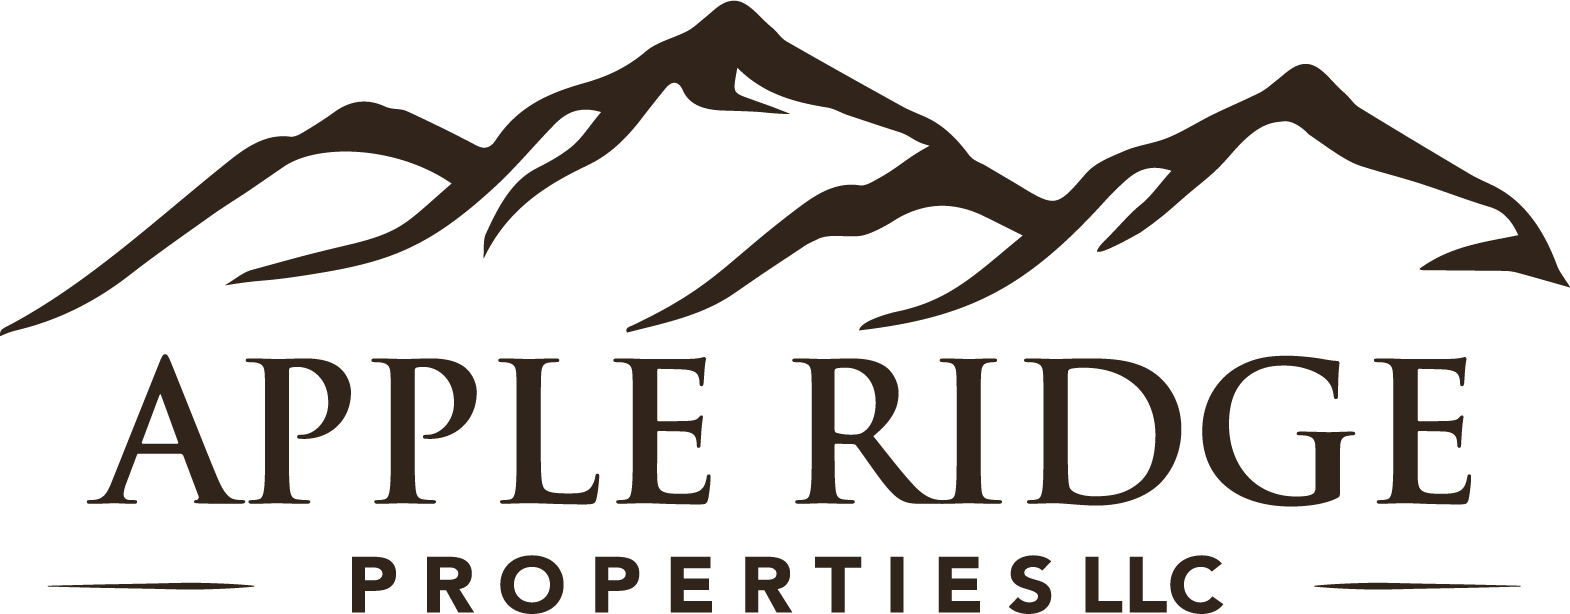 Apple Ridge Properties Logo